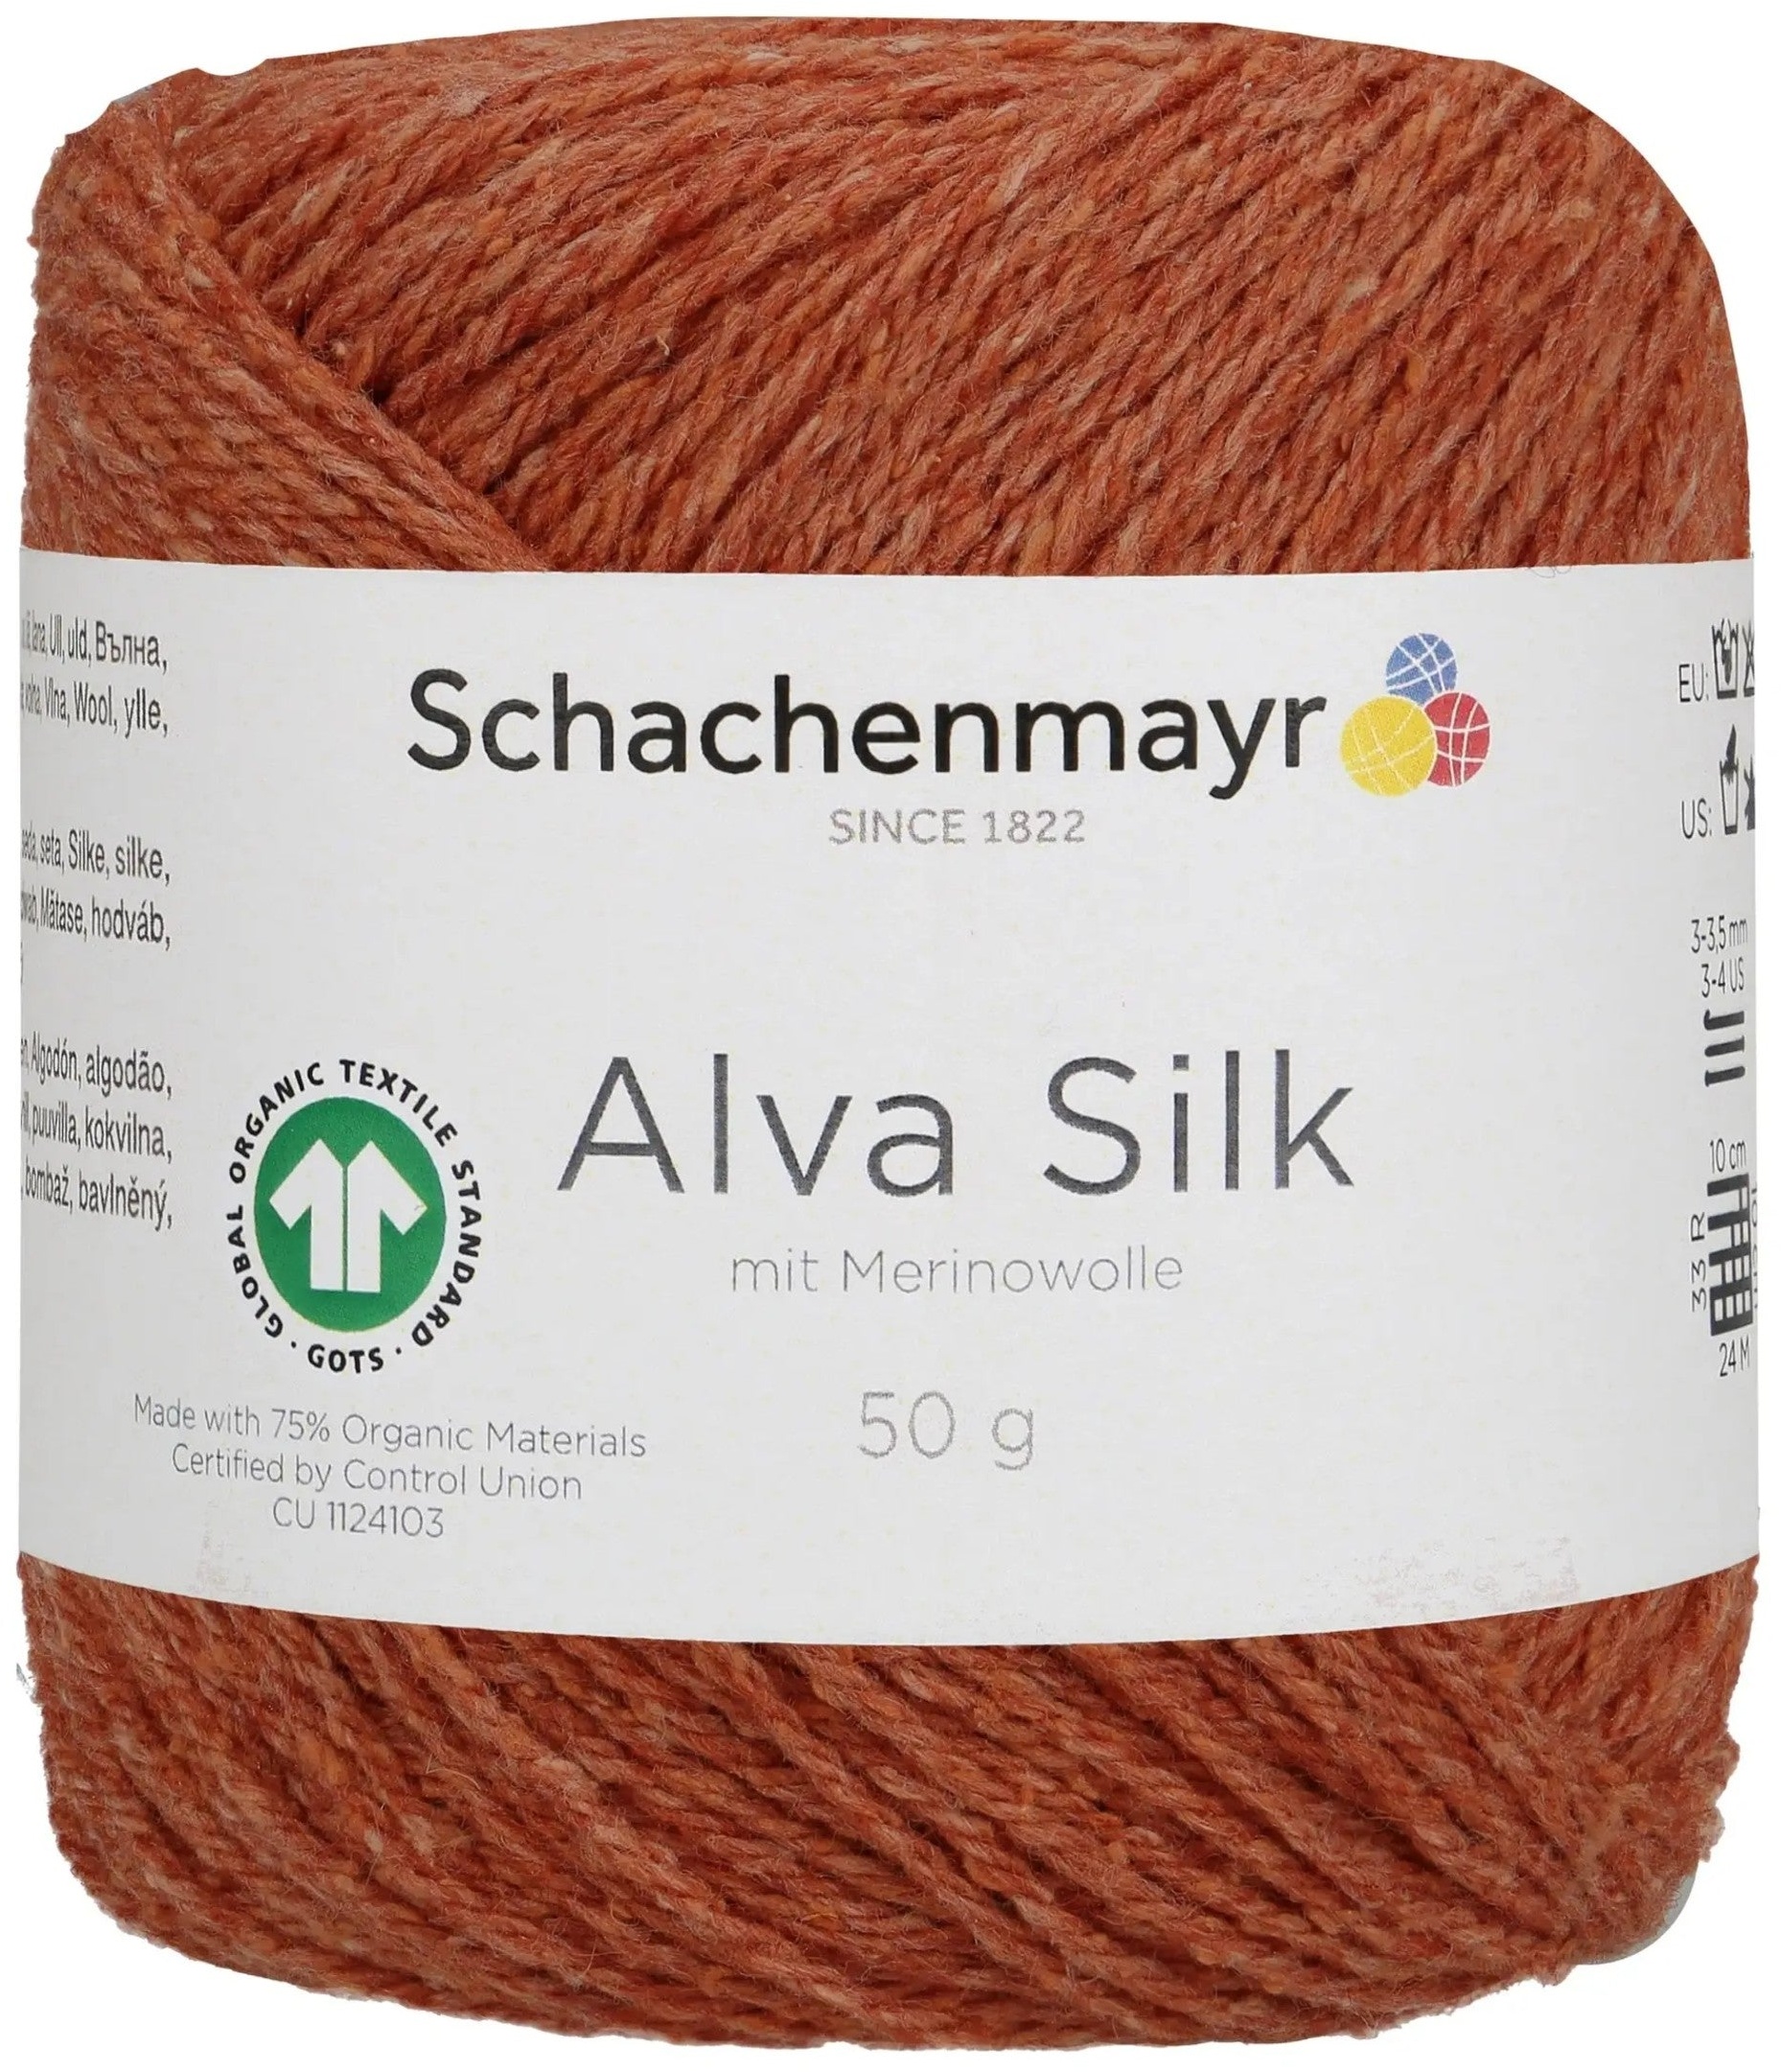 Alva Silk